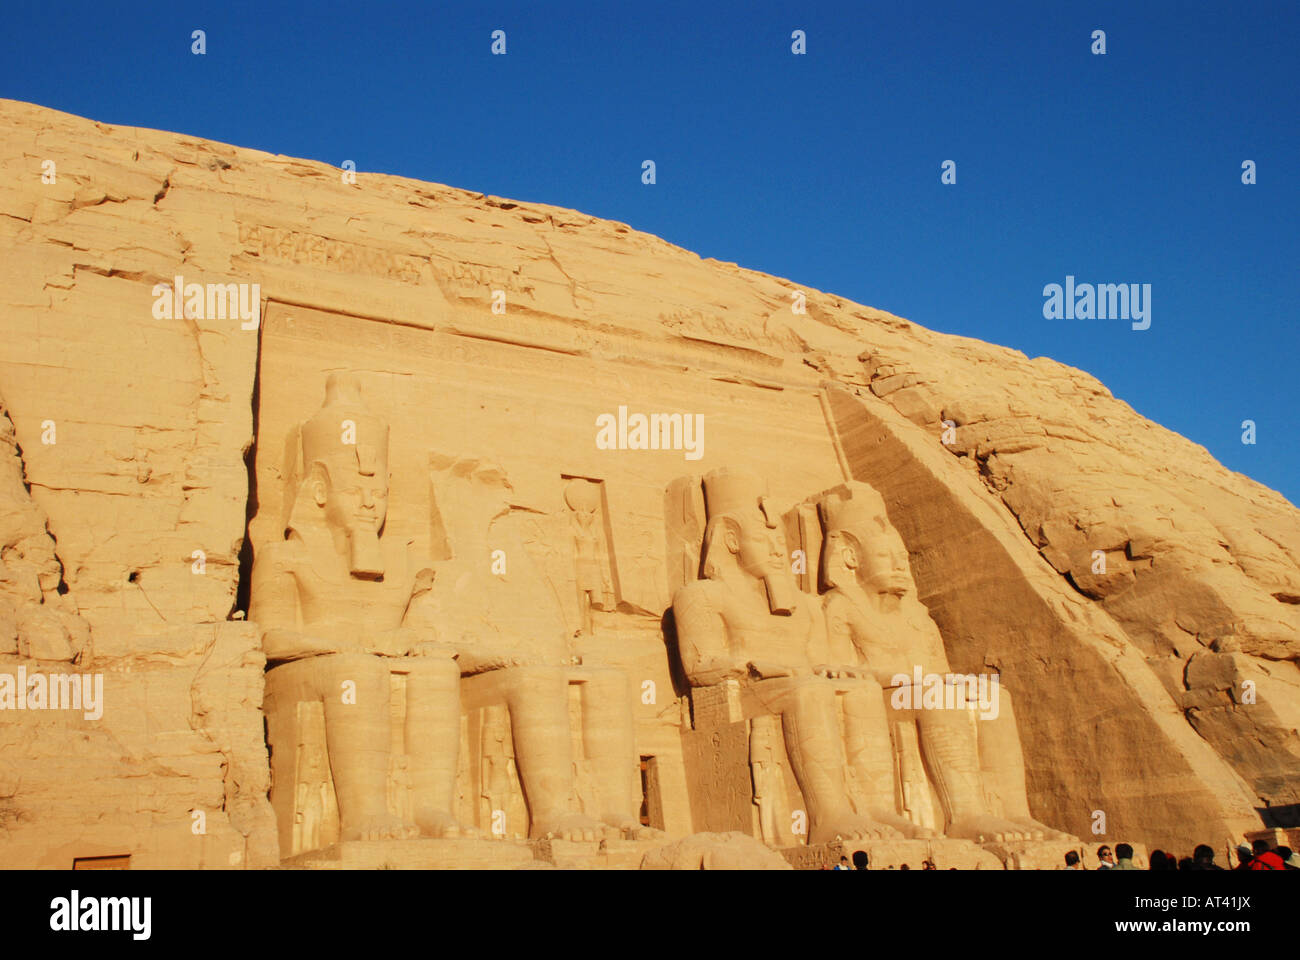 The Great Temple of Ramses II Abu Simbel at sunrise Egypt January 2008 Stock Photo